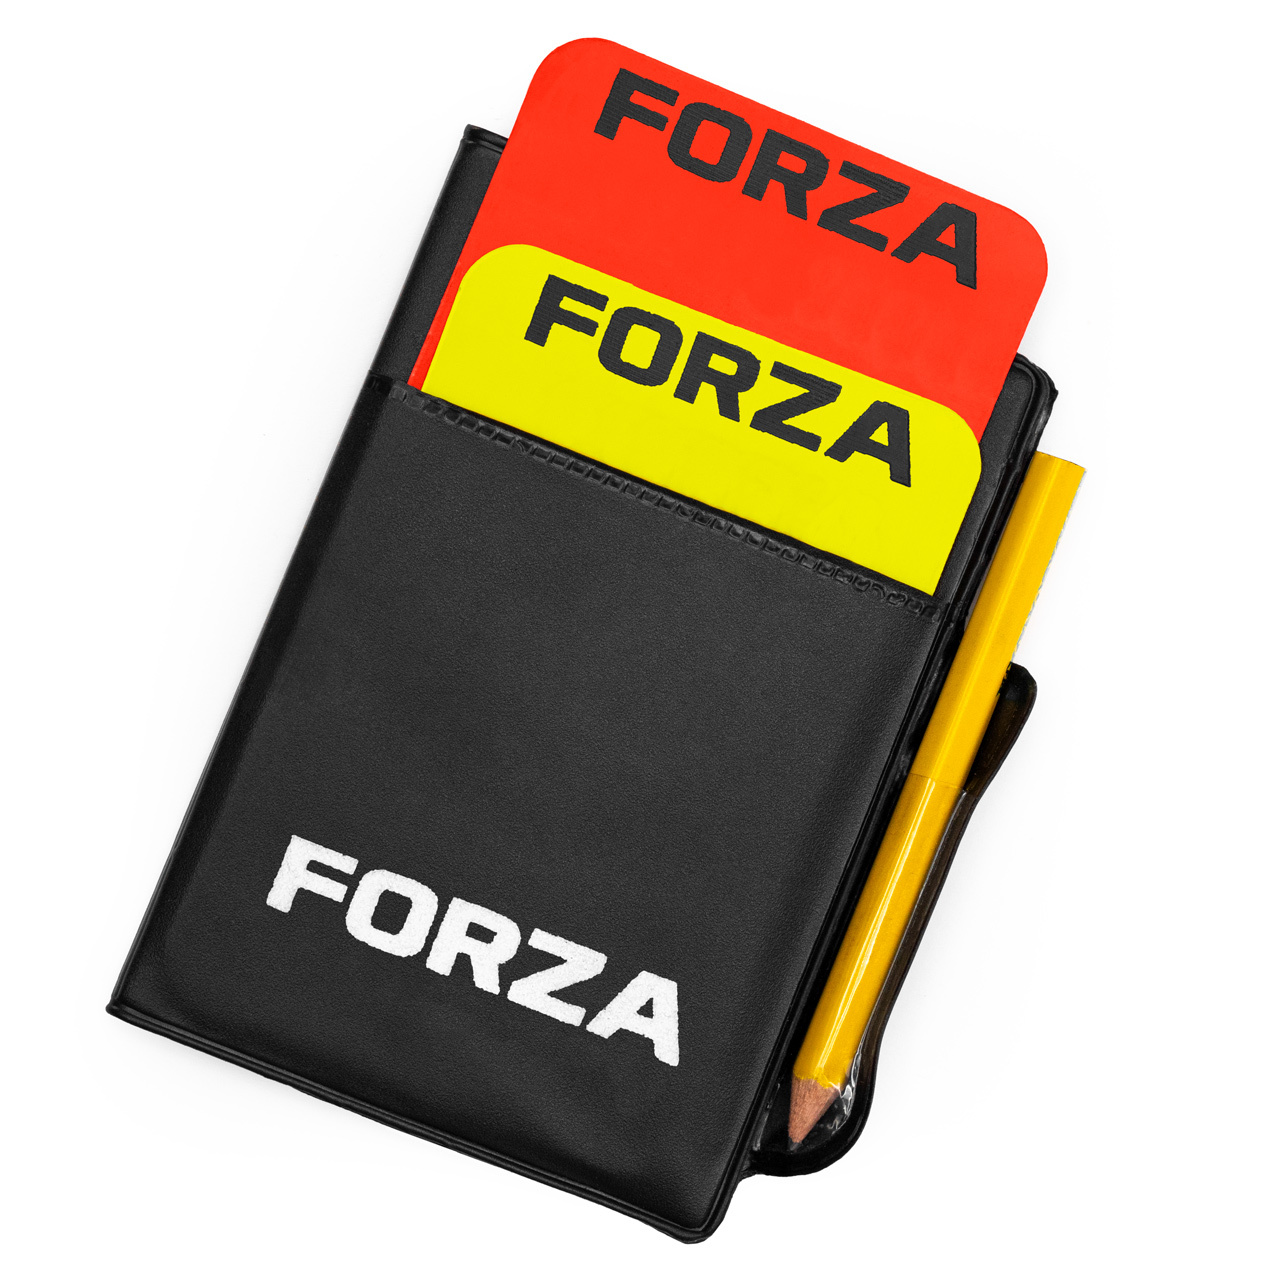 FORZA Soccer Referee Wallet